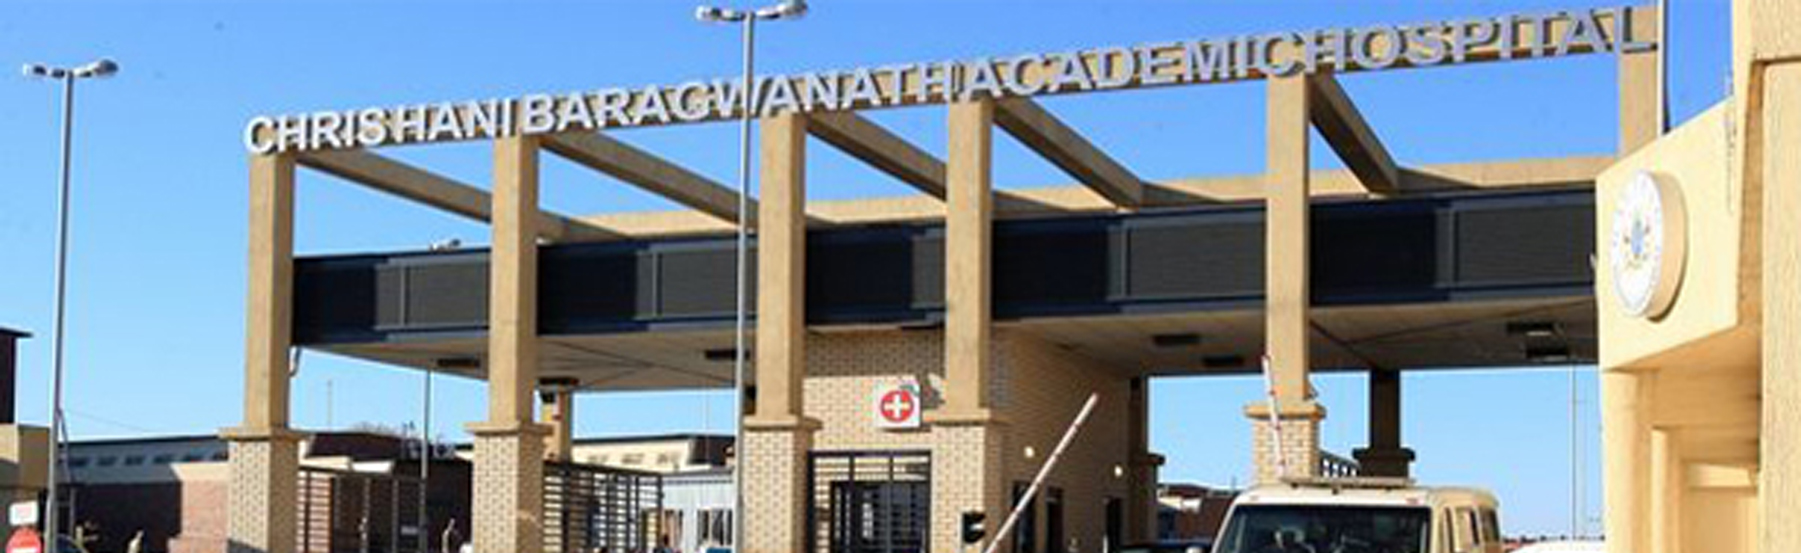 DA vs Chris Hani Baragwanath Hospital